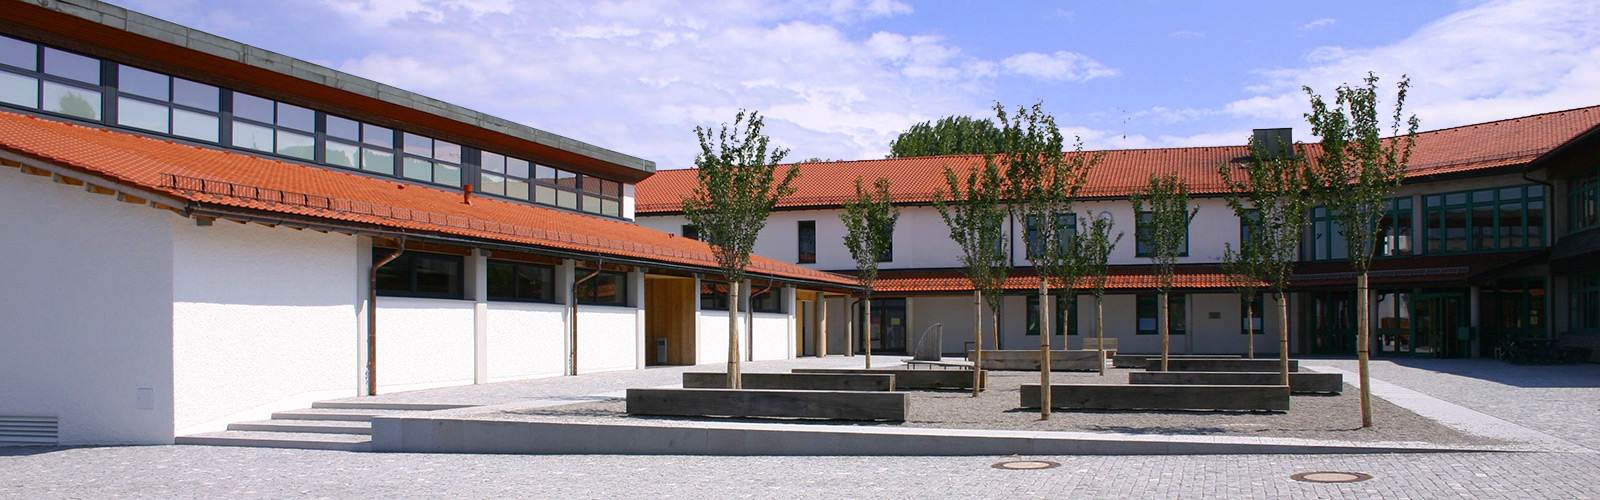 Willkommen in der Grundschule Wiggensbach